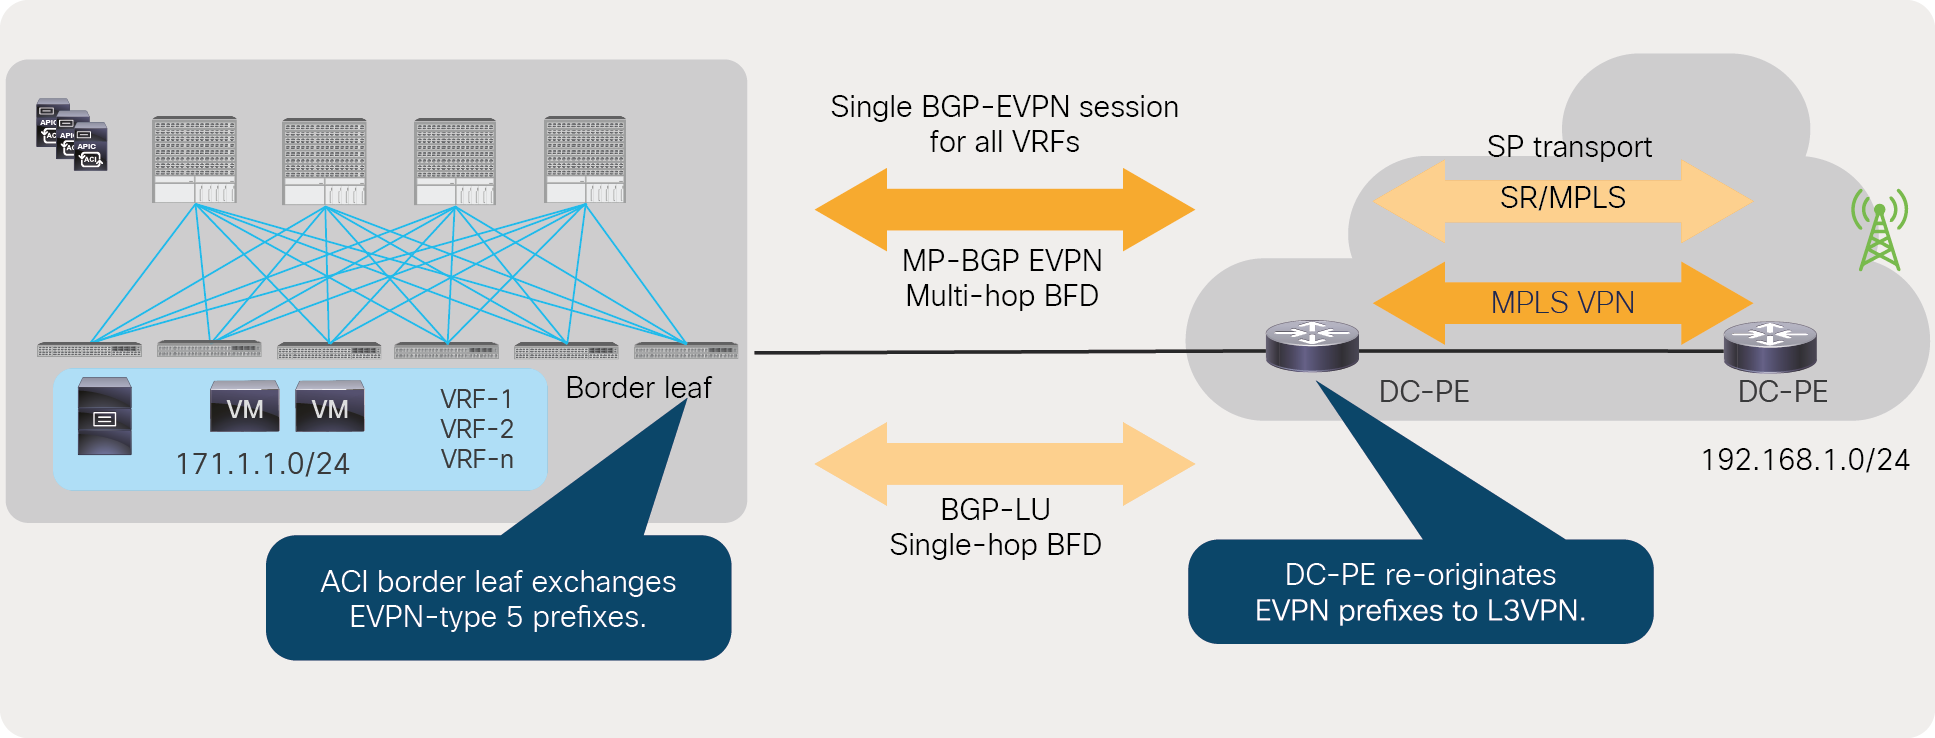 Cisco ACI to SR/MPLS handoff solution overview